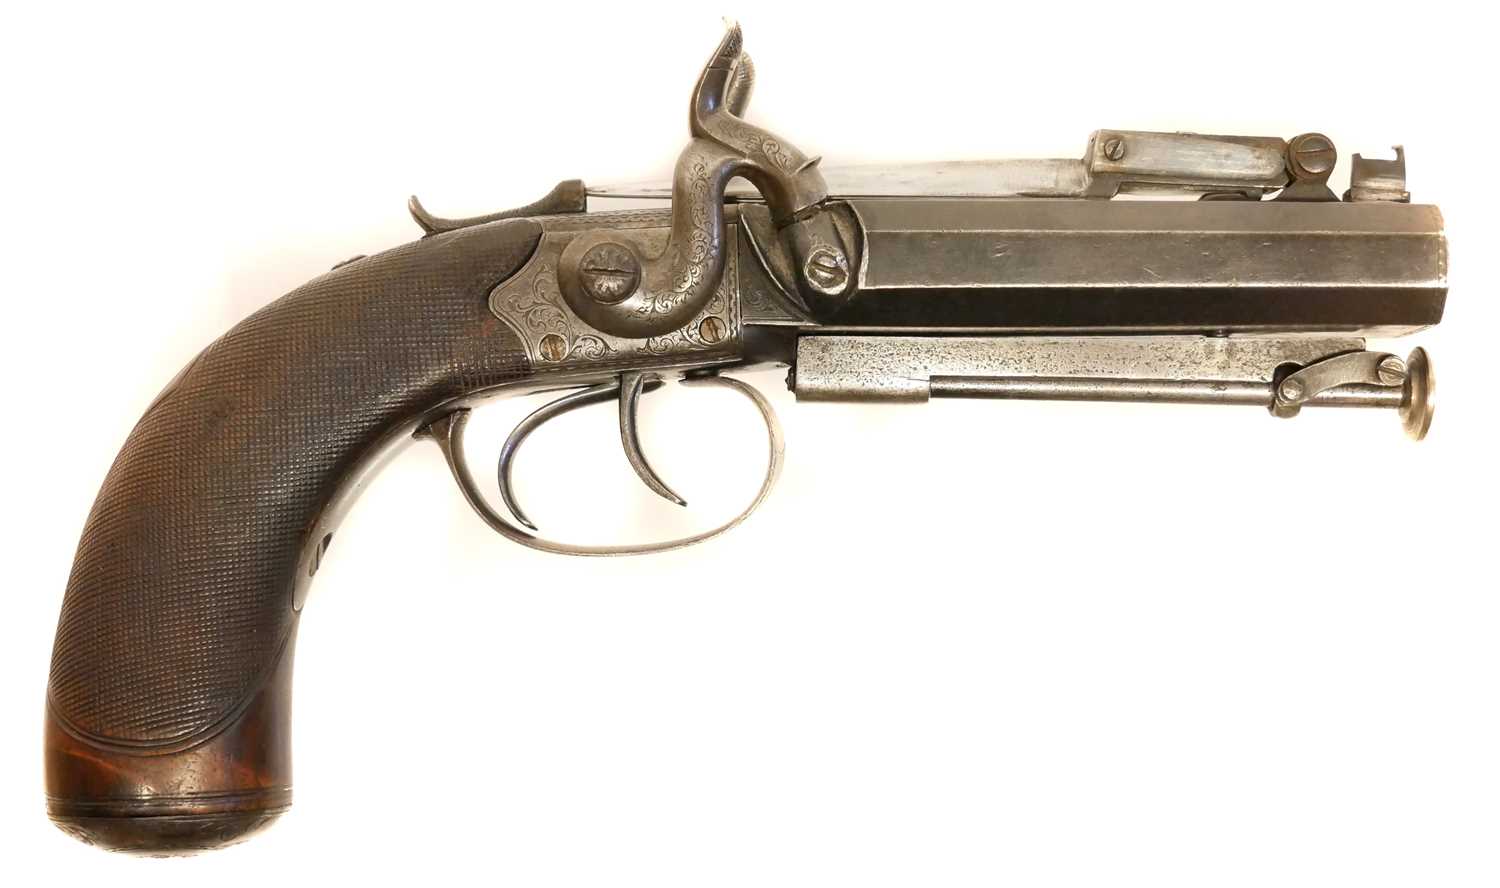 Atkinson of Lancaster double barrel pistol with bayonet